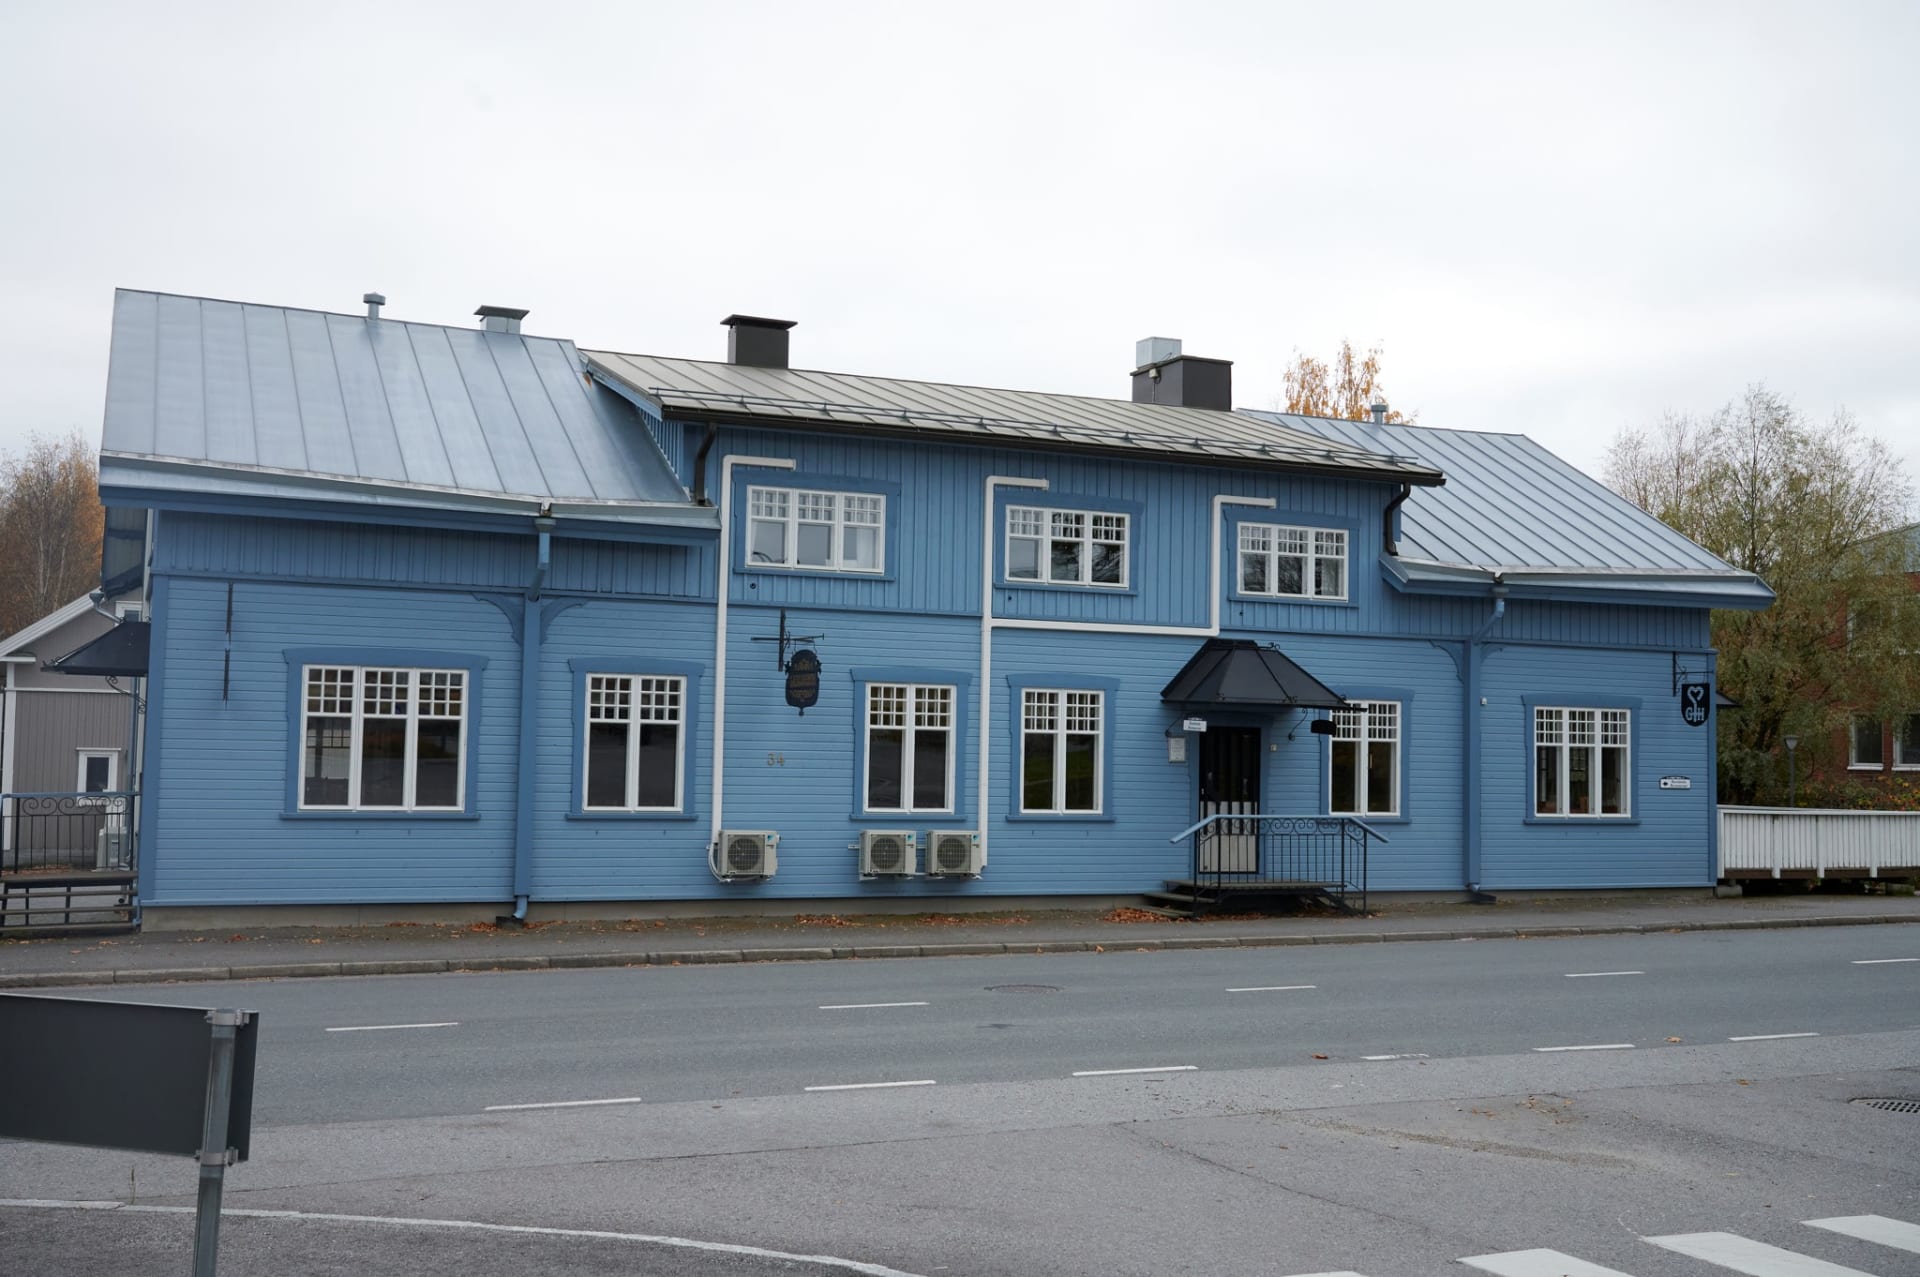 Liekoranta building, an old blue wooden house